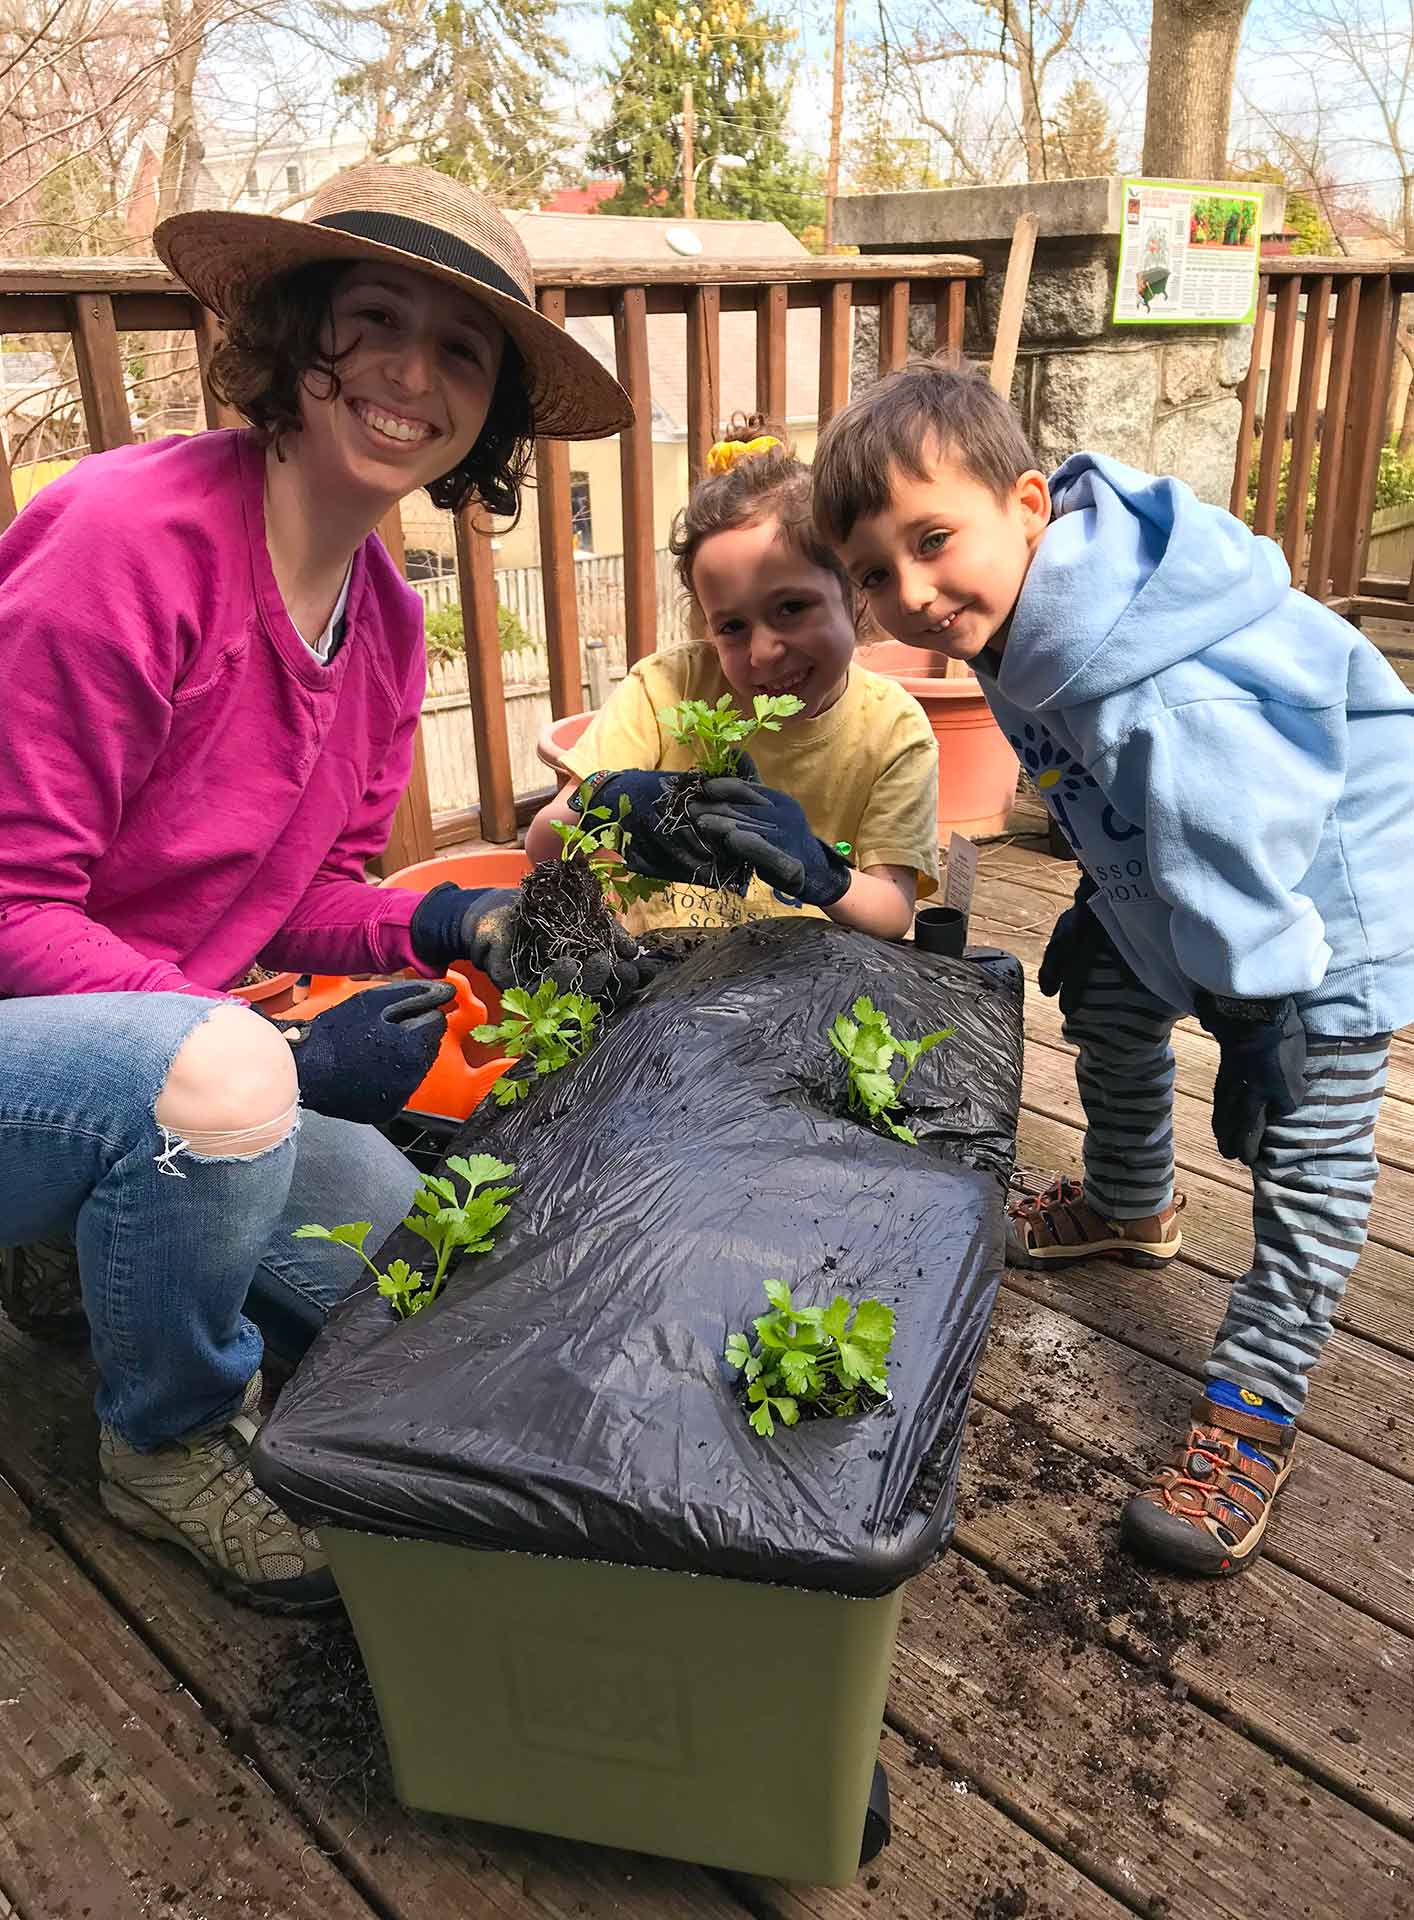 Rachel Rosenberg Goldstein plants a container garden on her deck with her kids